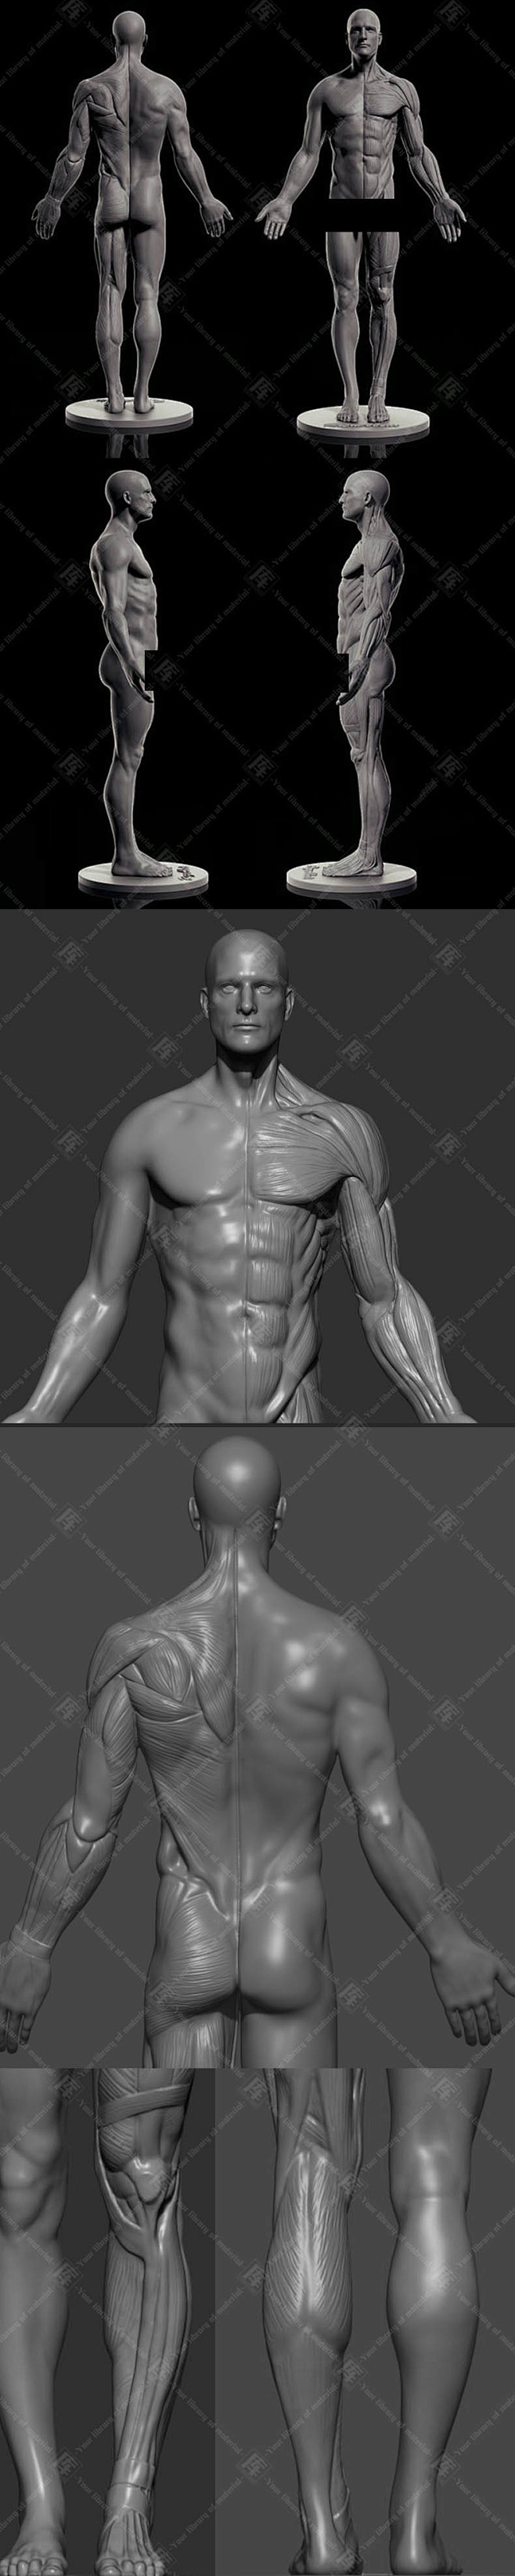 ZB男性人体细节解剖肌肉模型 肌肉解剖z...